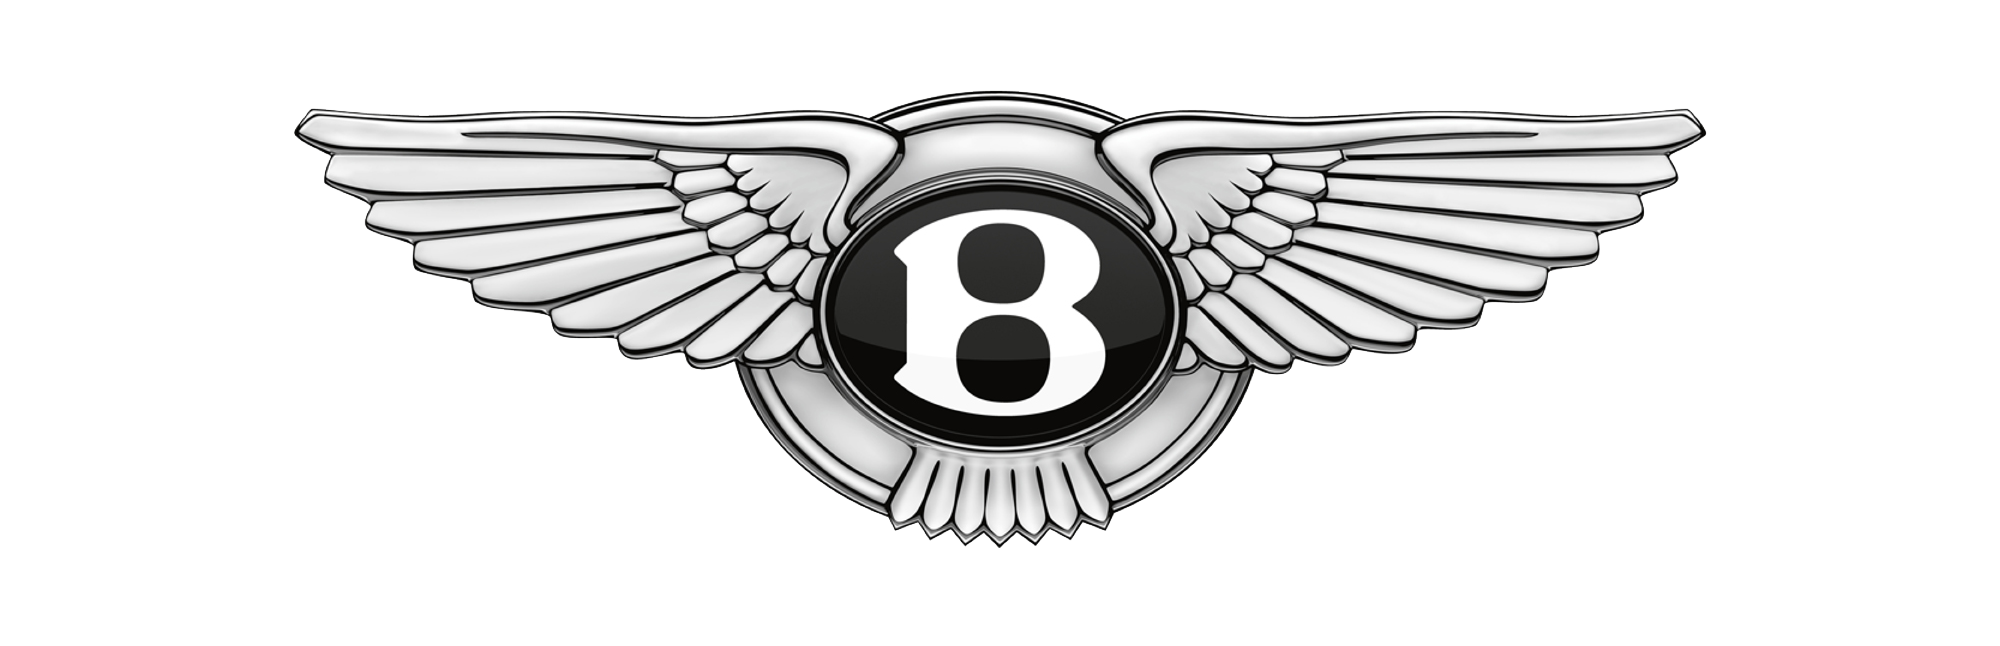 21 Bentley Logo Wallpapers  WallpaperSafari